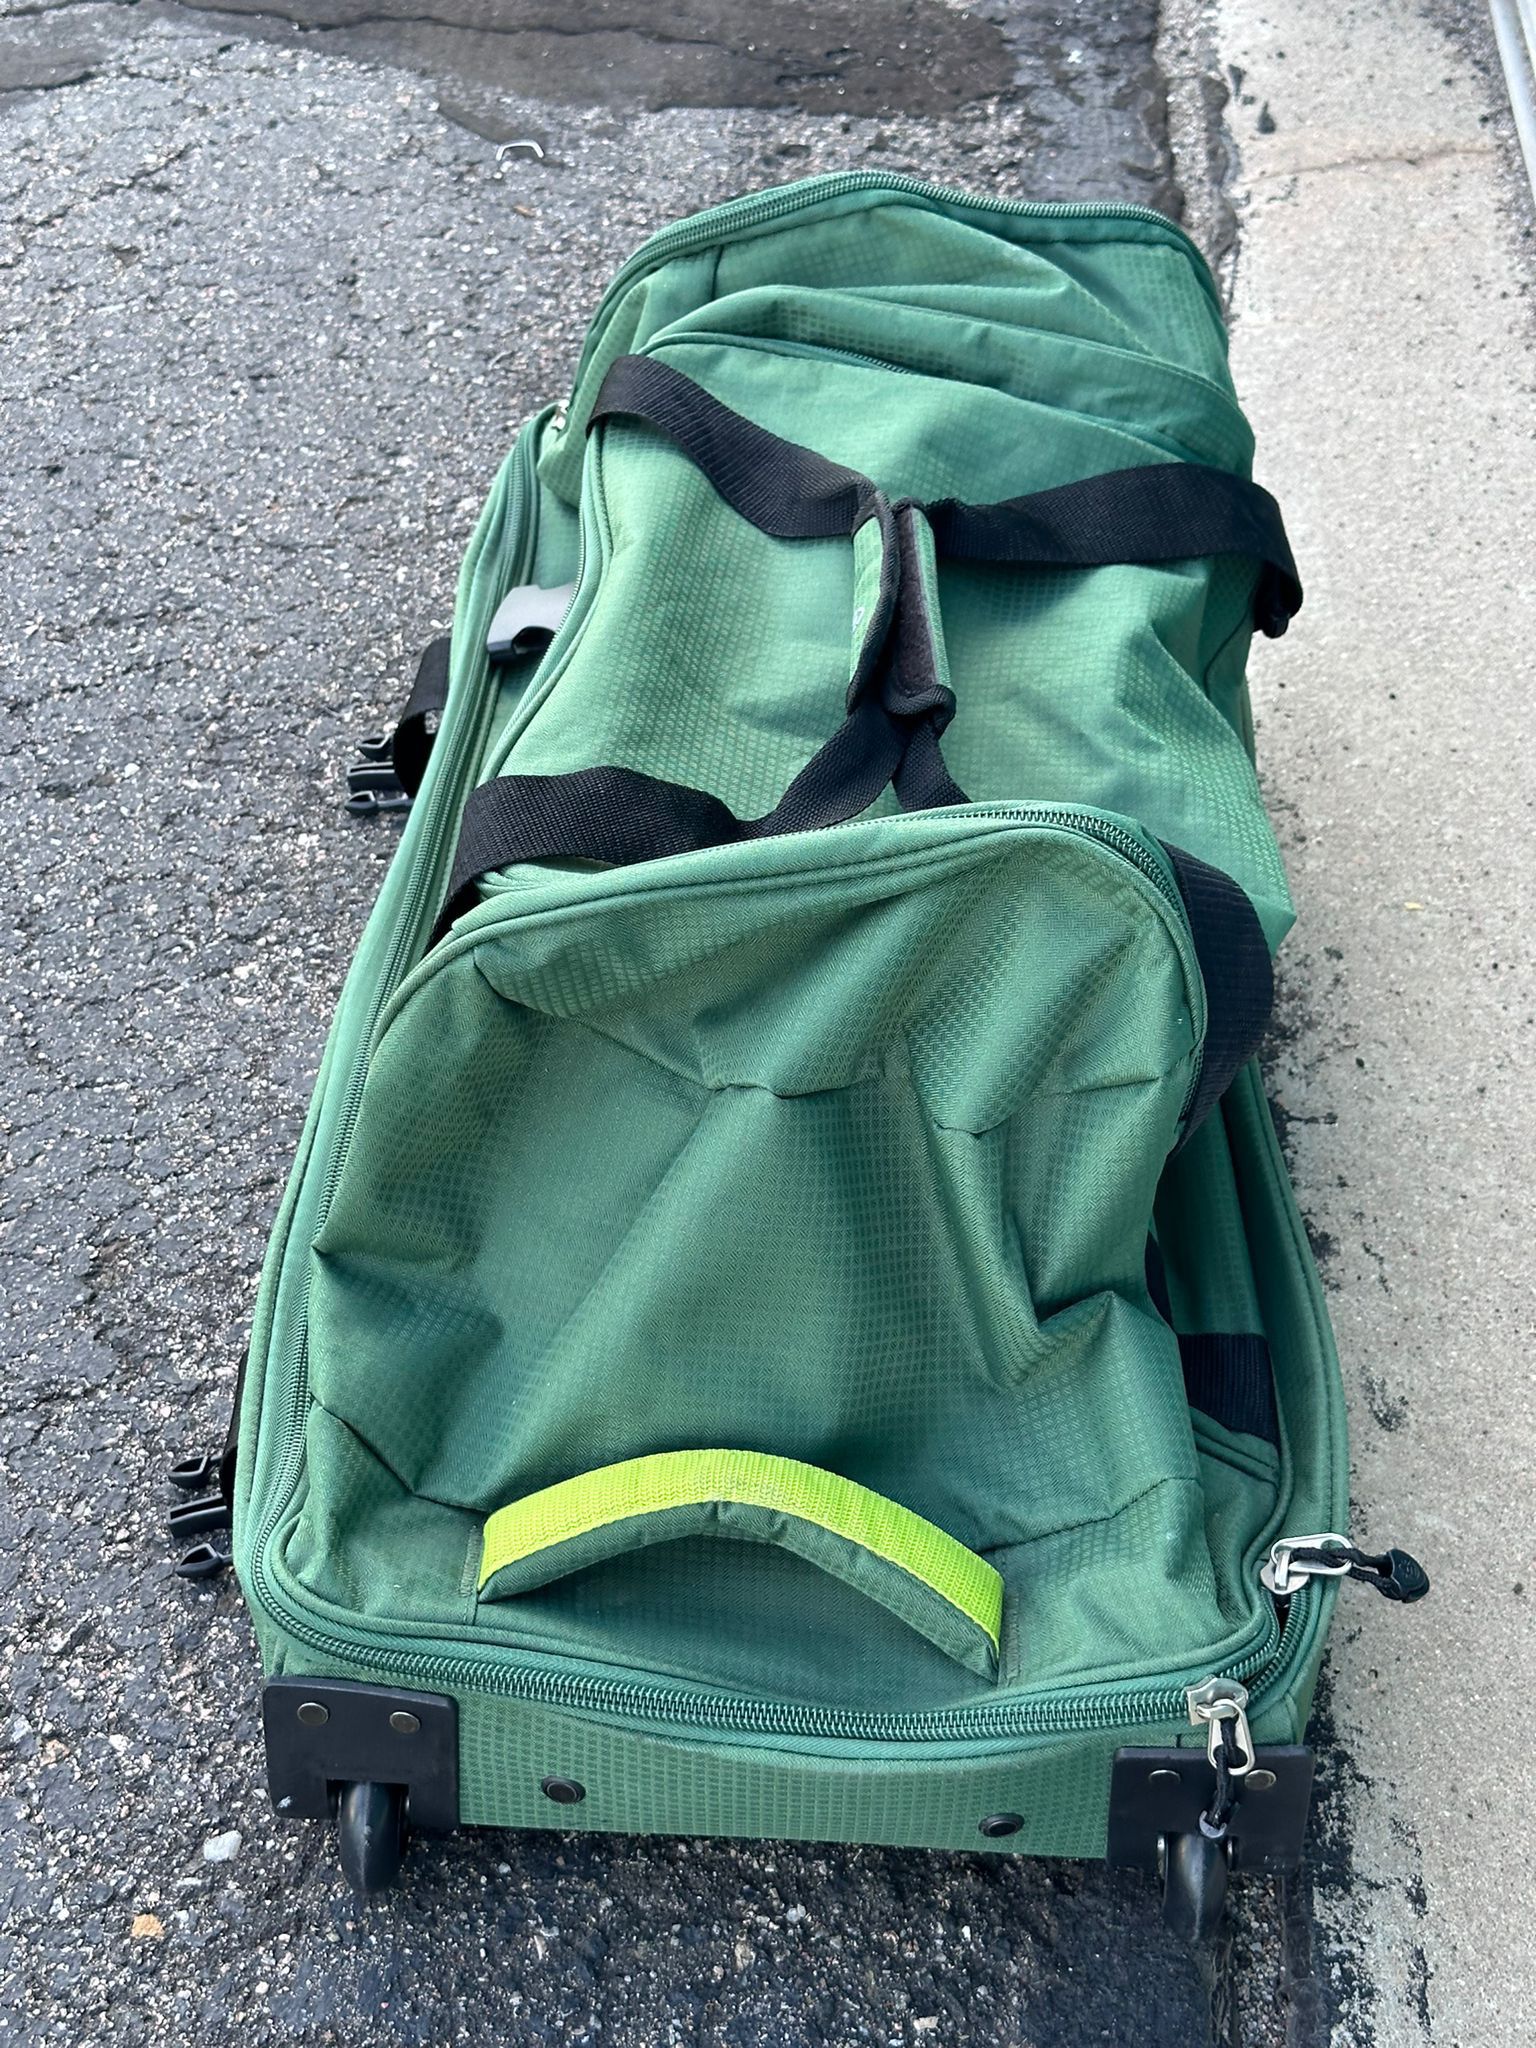 #858 Coleman Soft Luggage Duffle Bag w/ Wheels Green 32x14